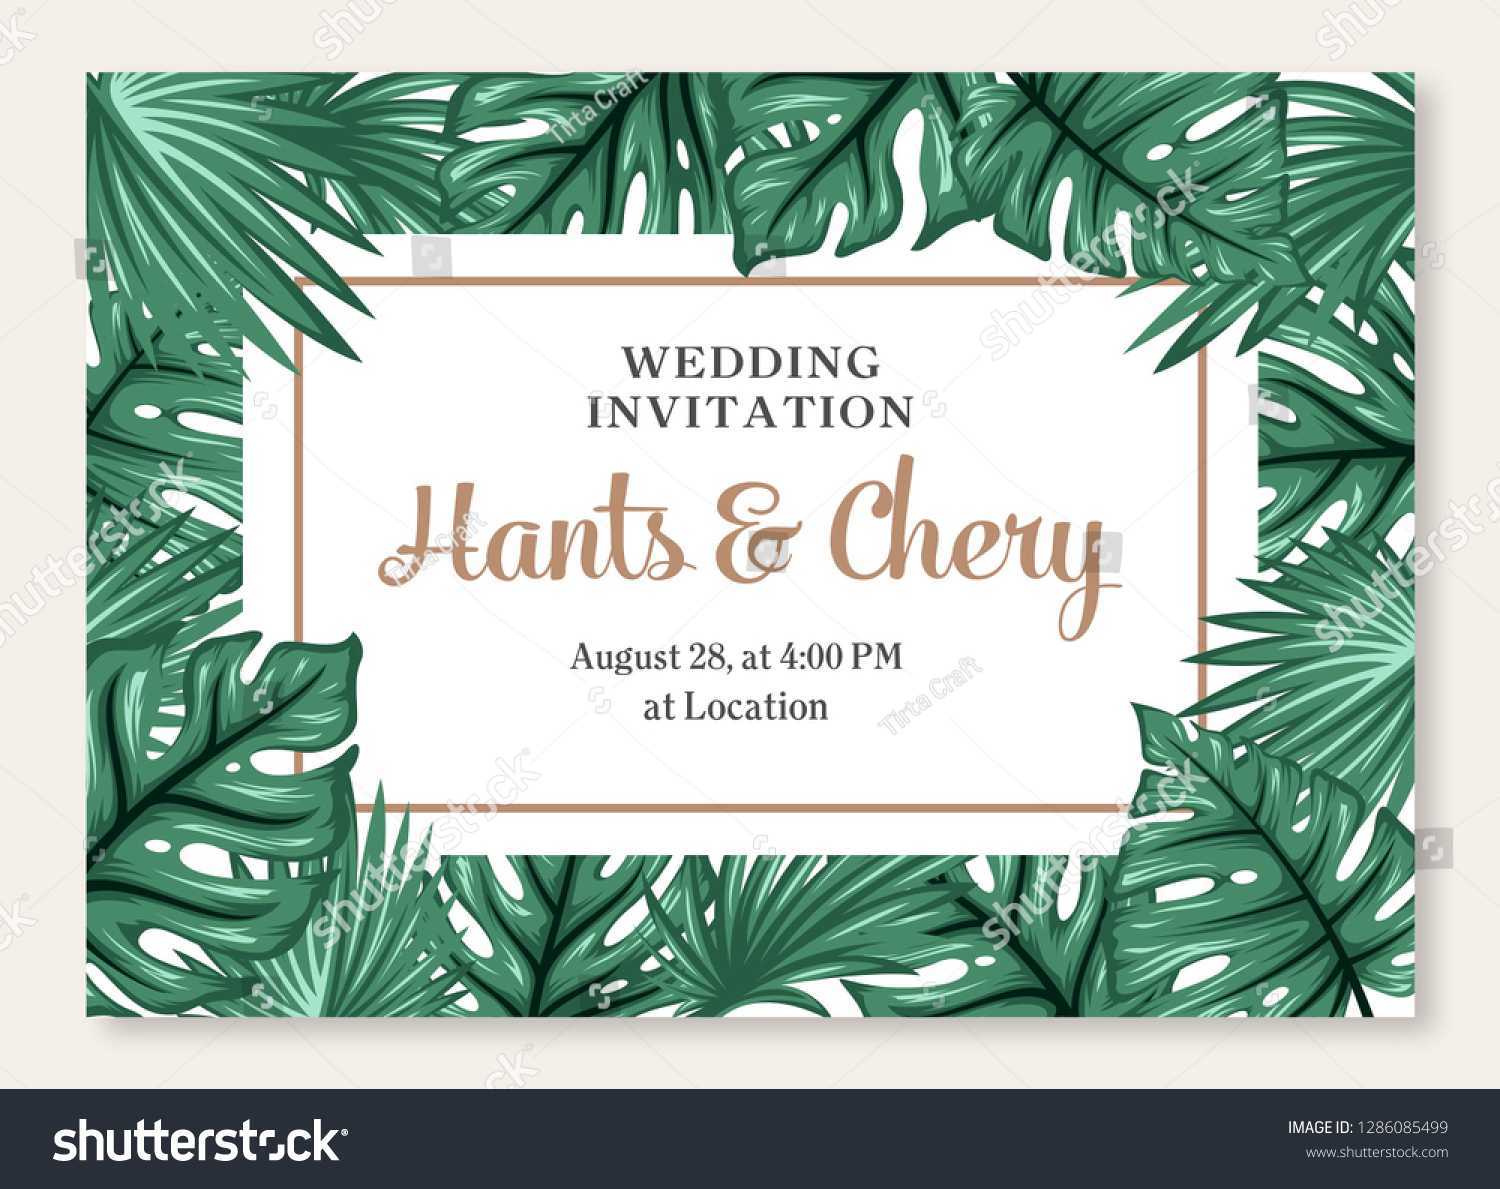 Стоковая Векторная Графика «Wedding Marriage Event With Event Invitation Card Template